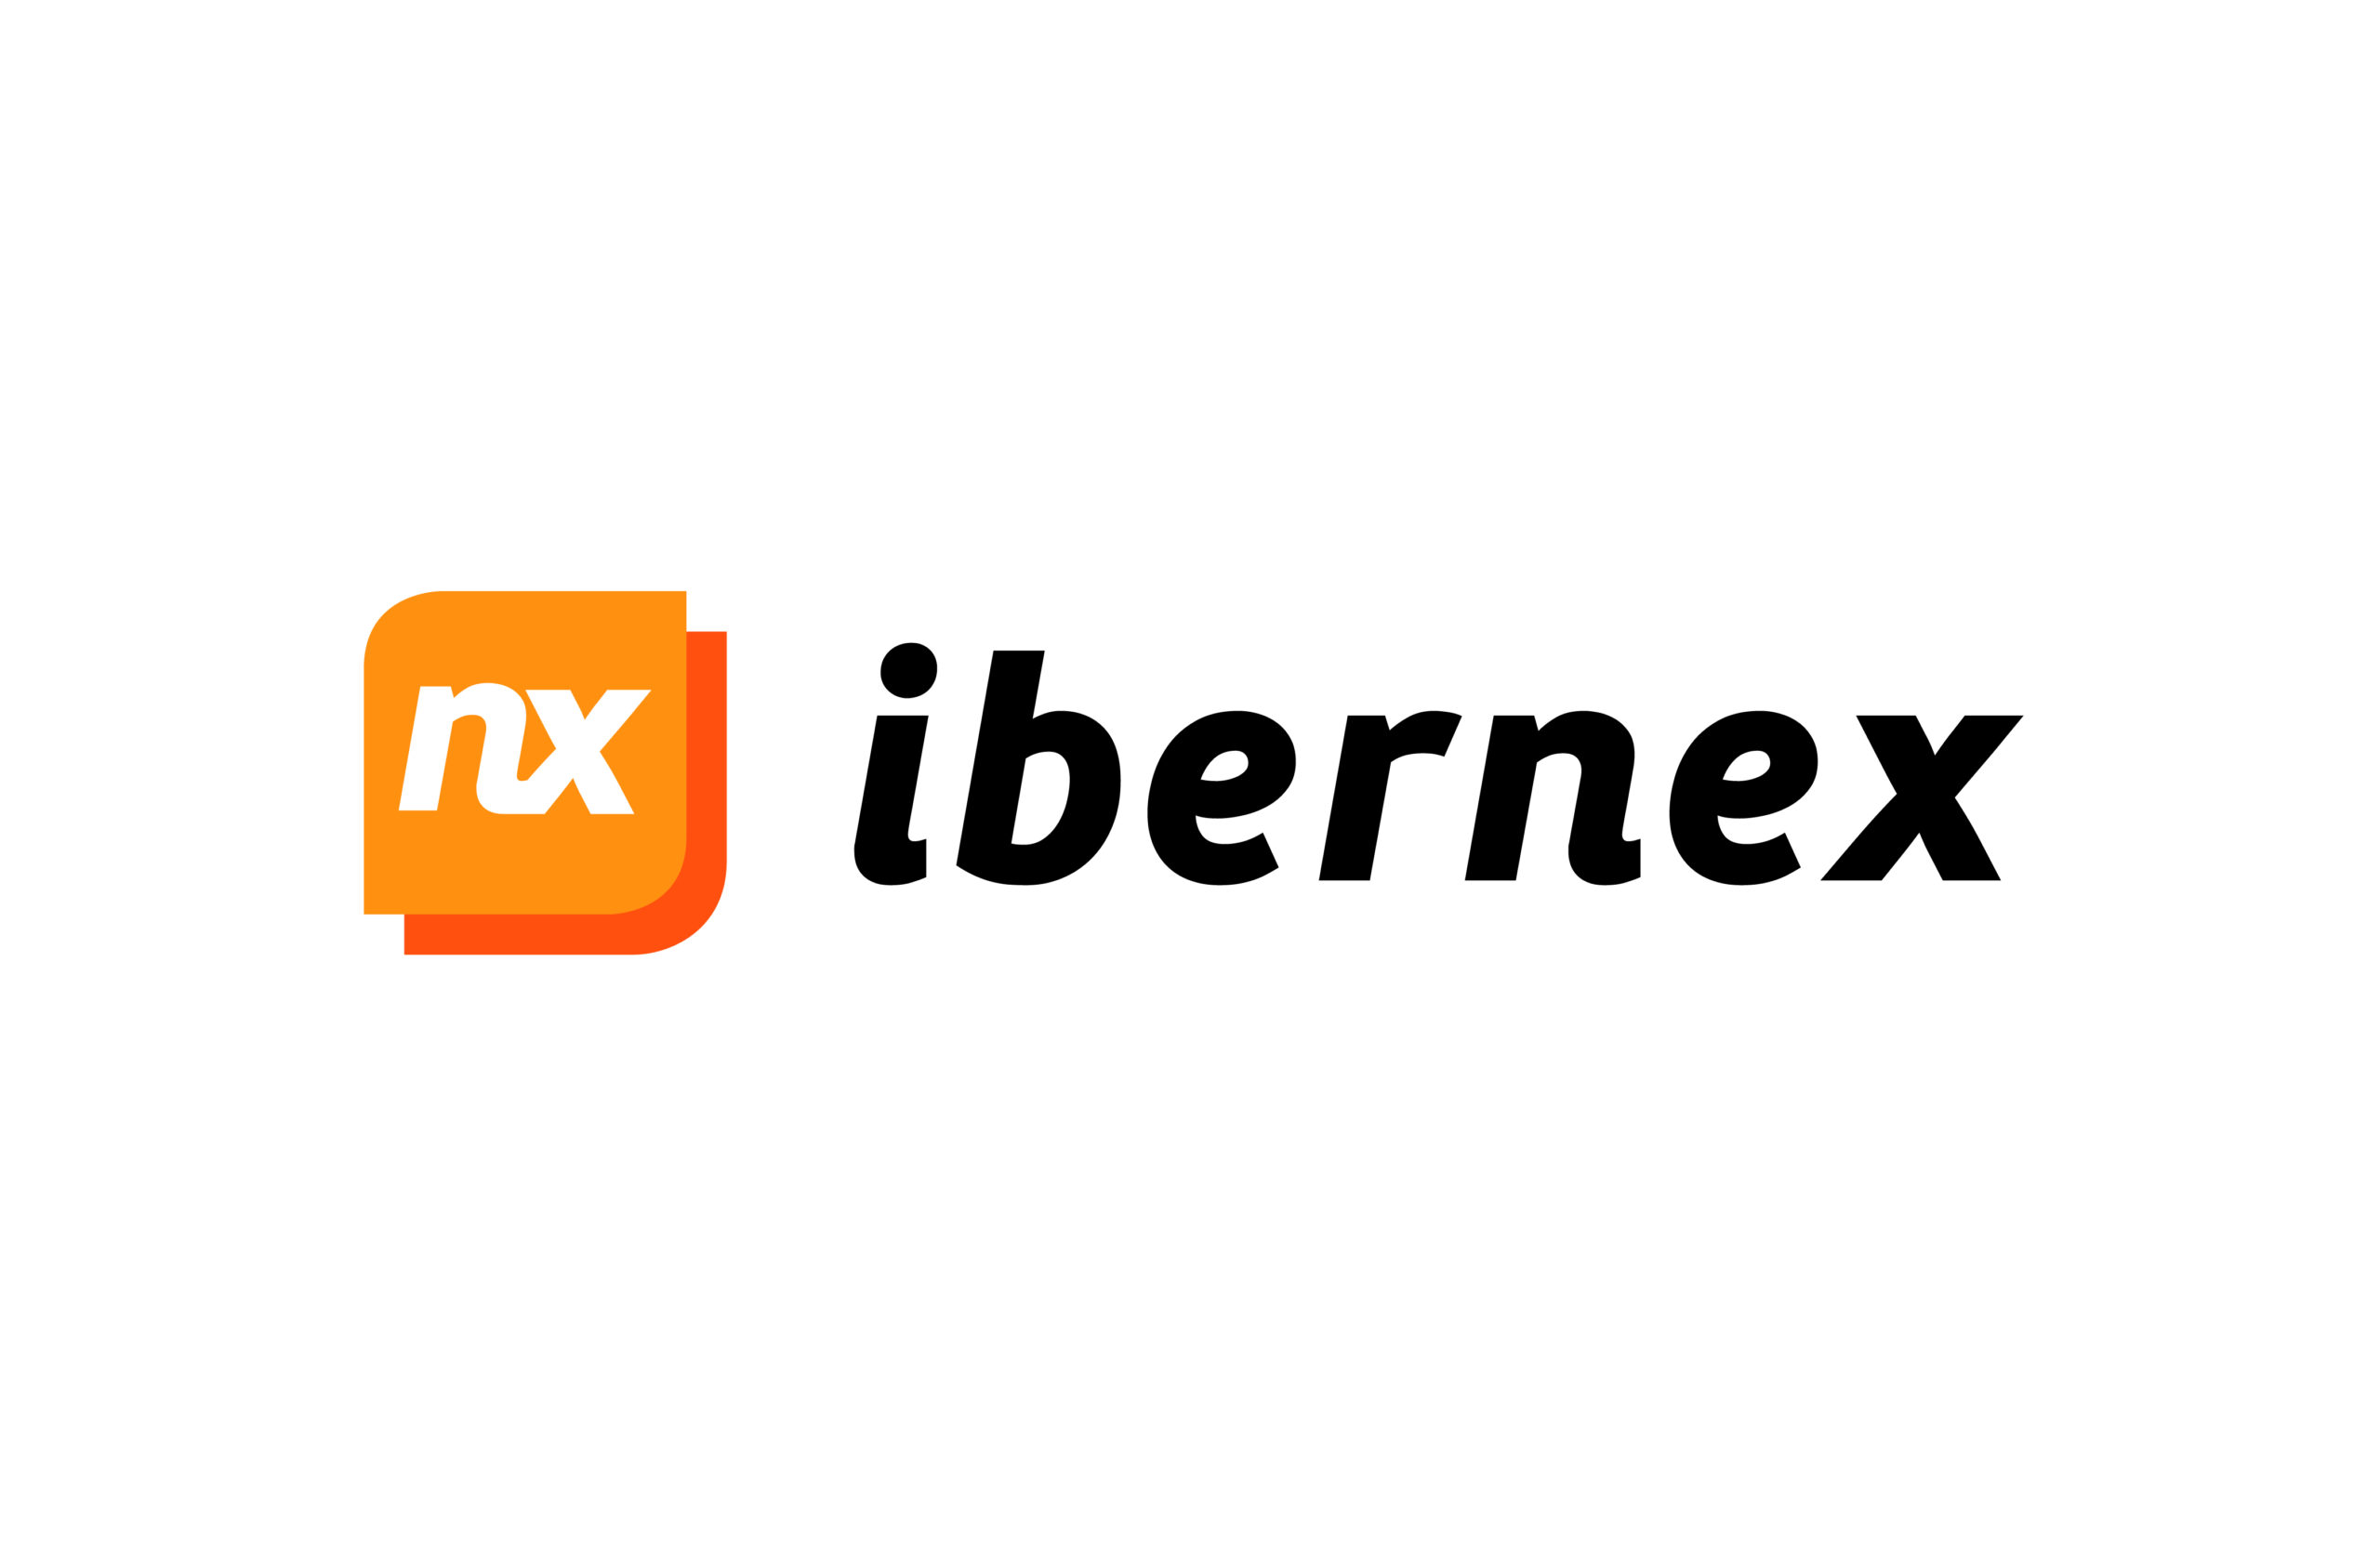 Modulo De Localizacin Para Software De Gestin Helpnex NX0422 - IBERNEX